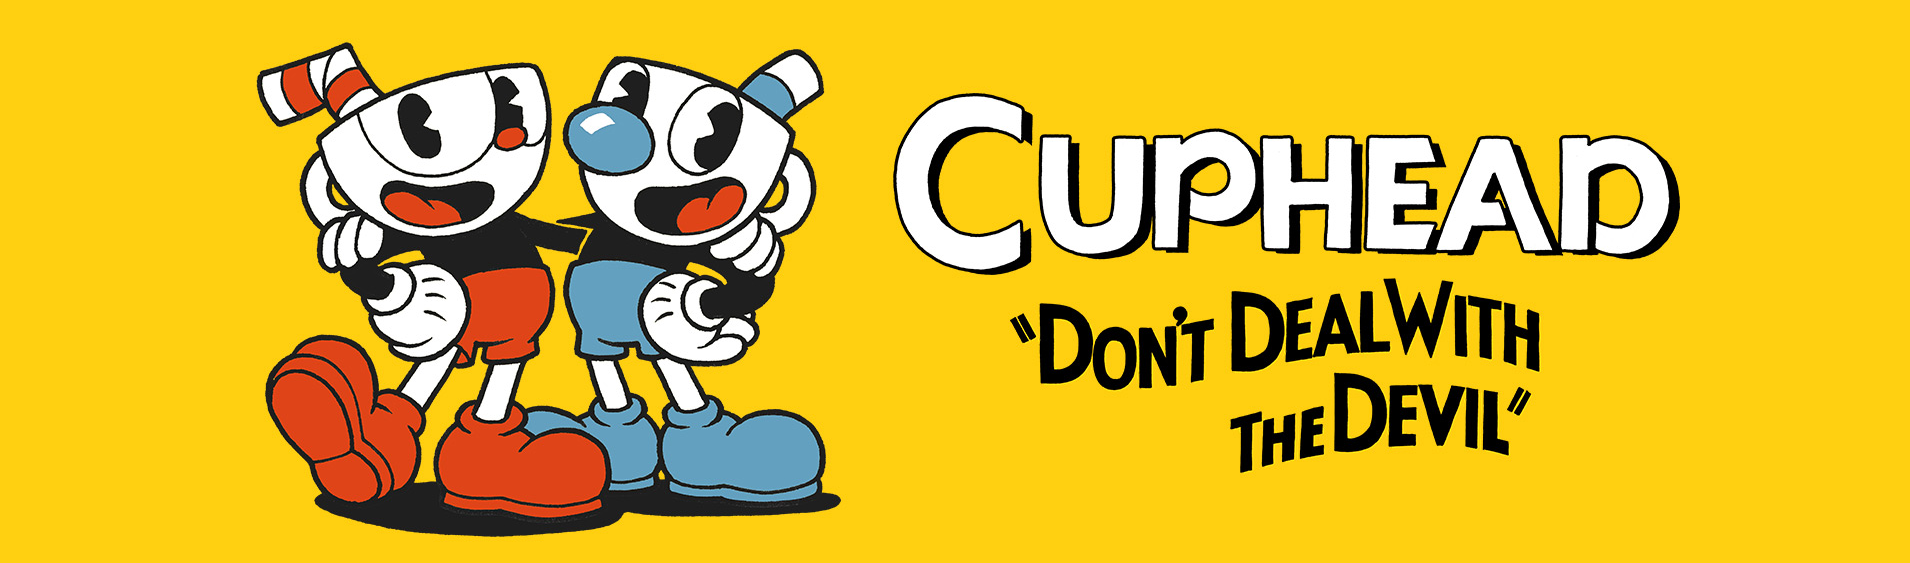 cuphead banner 1